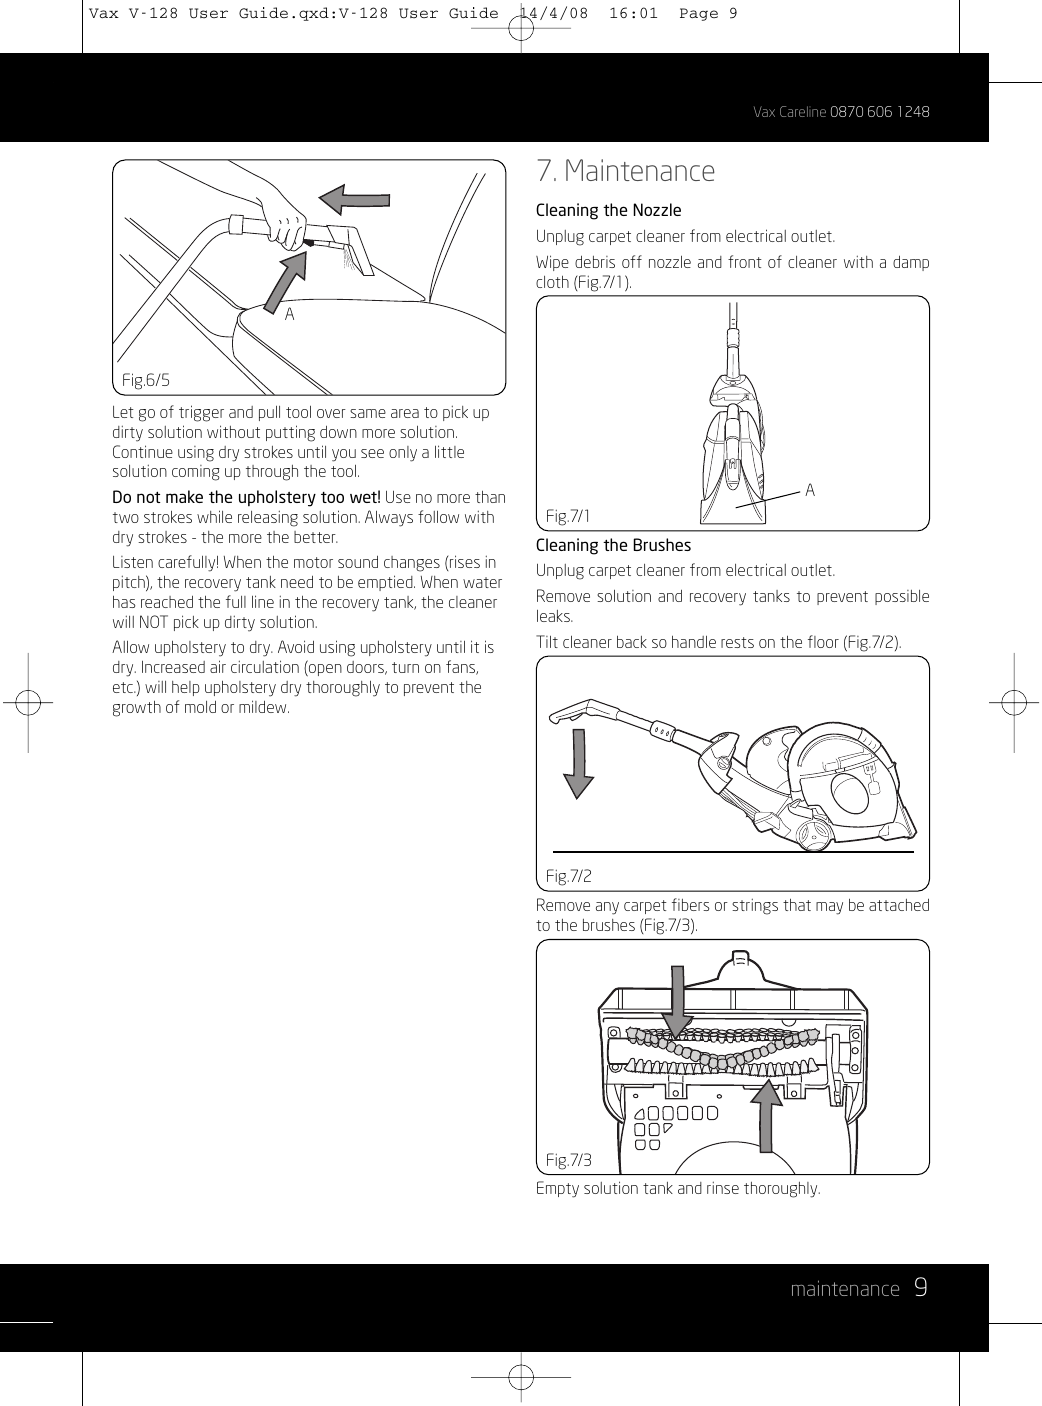 Page 9 of 12 - Vizio Vizio-V-128-Users-Manual- Vax V-128 Agility Carpet Washer  Vizio-v-128-users-manual